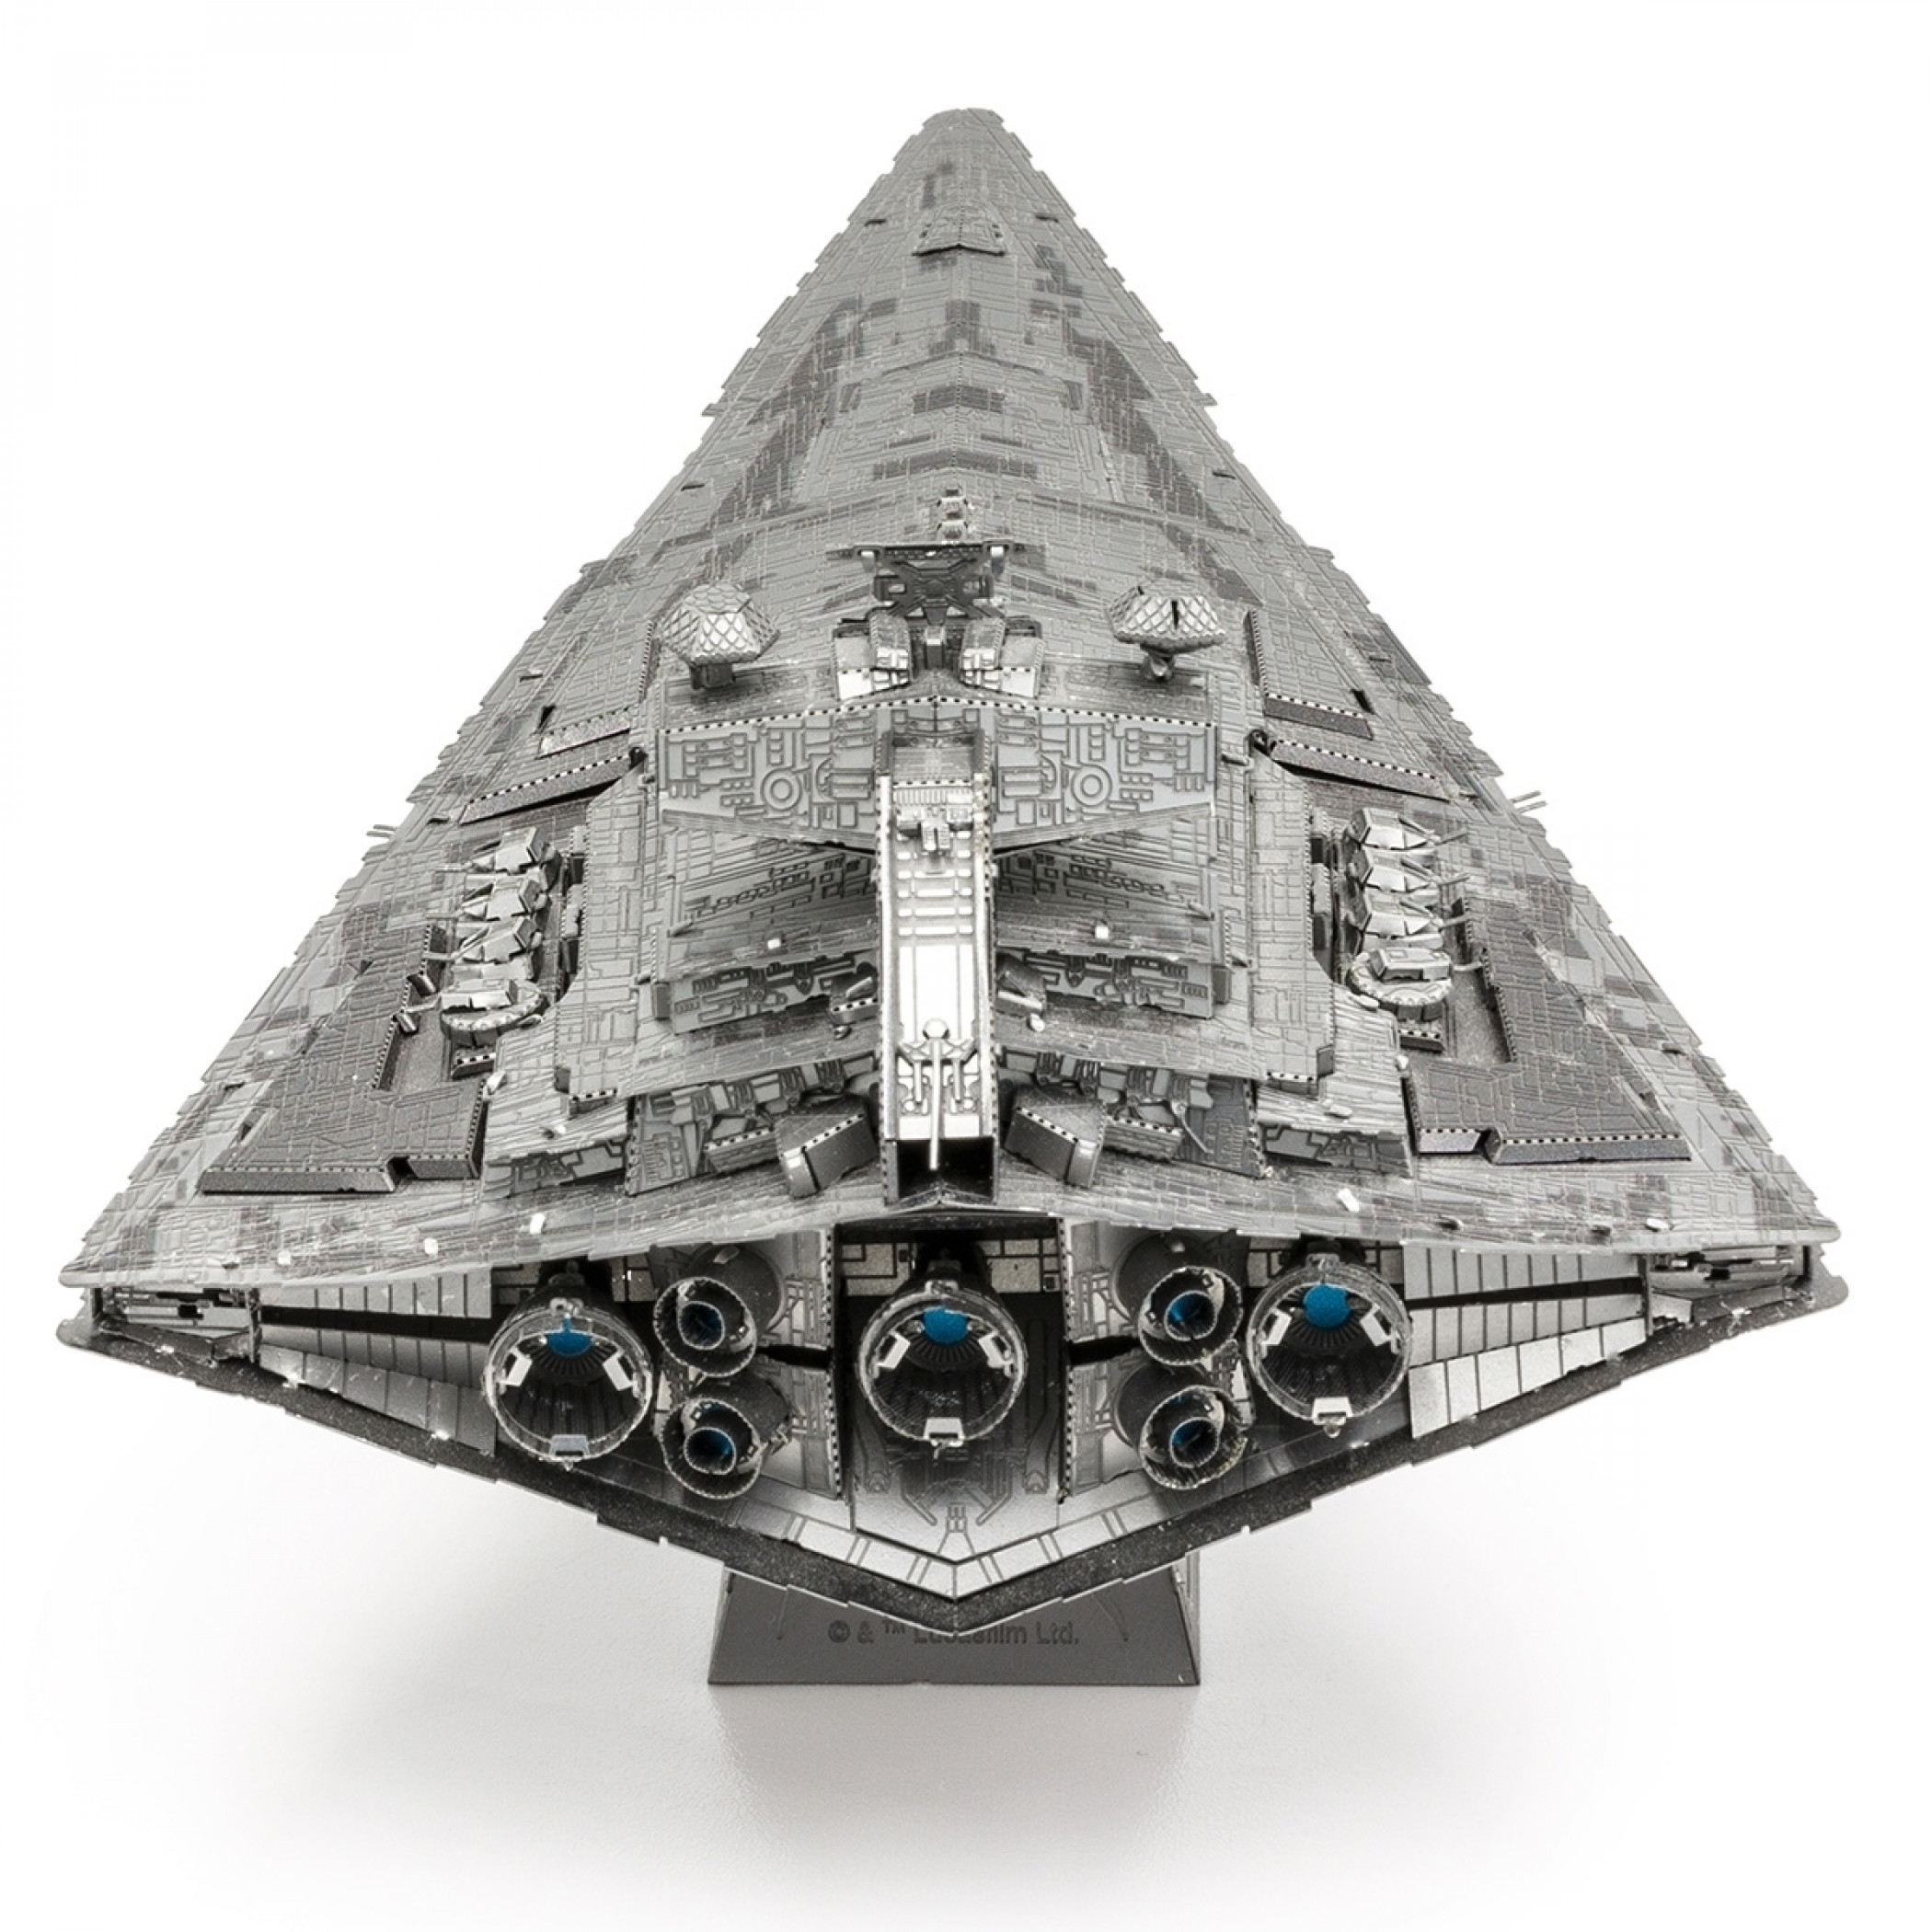 Star Wars Imperial Star Destroyer Premium Metal Earth Model Kit